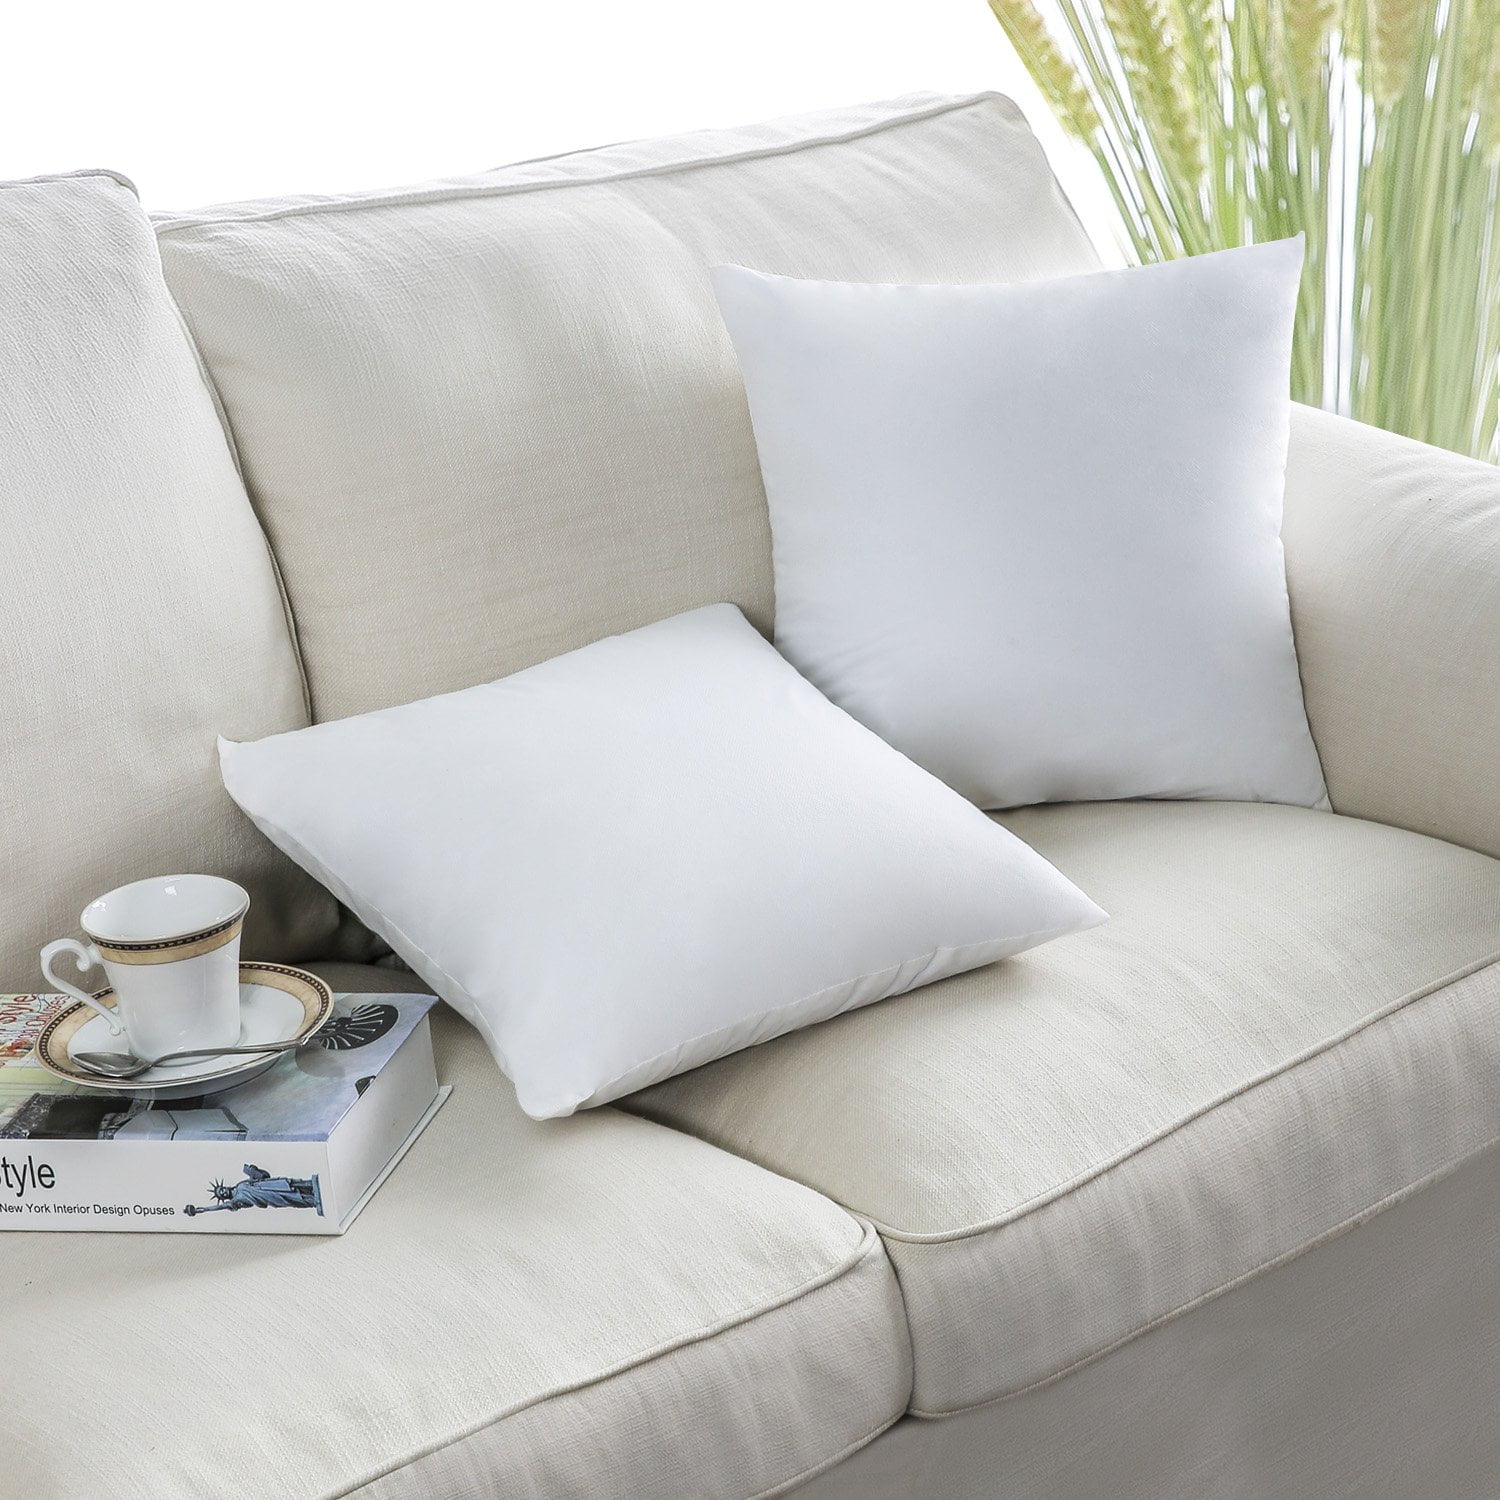 Poly-Fil Premier Pillow Form 18”x18” Accent Pillow – gather here online